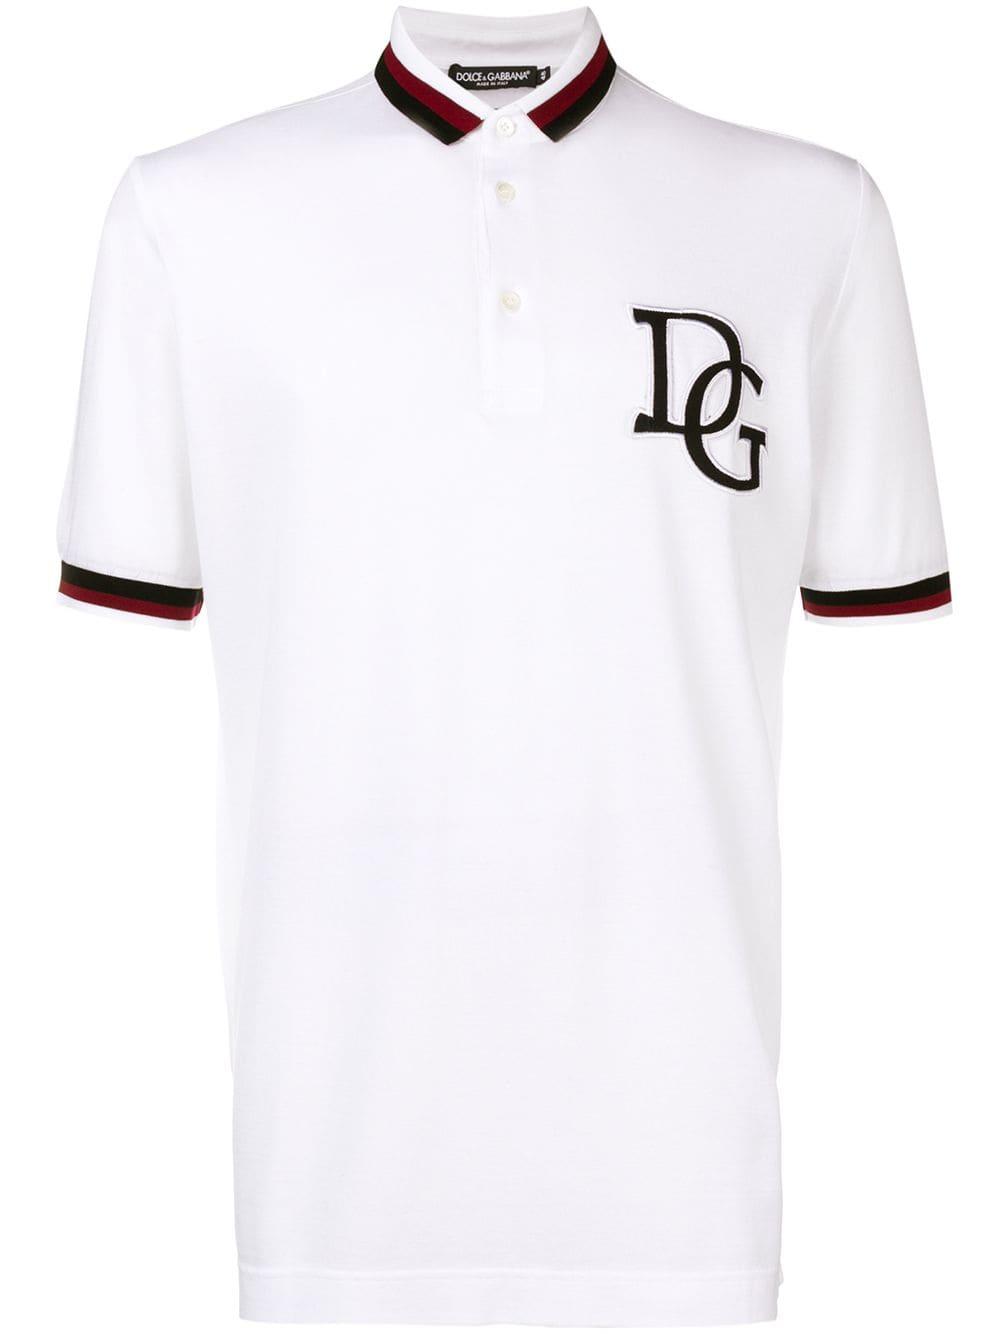 Dolce & Gabbana Cotton Dg Logo Polo Shirt in White for Men - Lyst